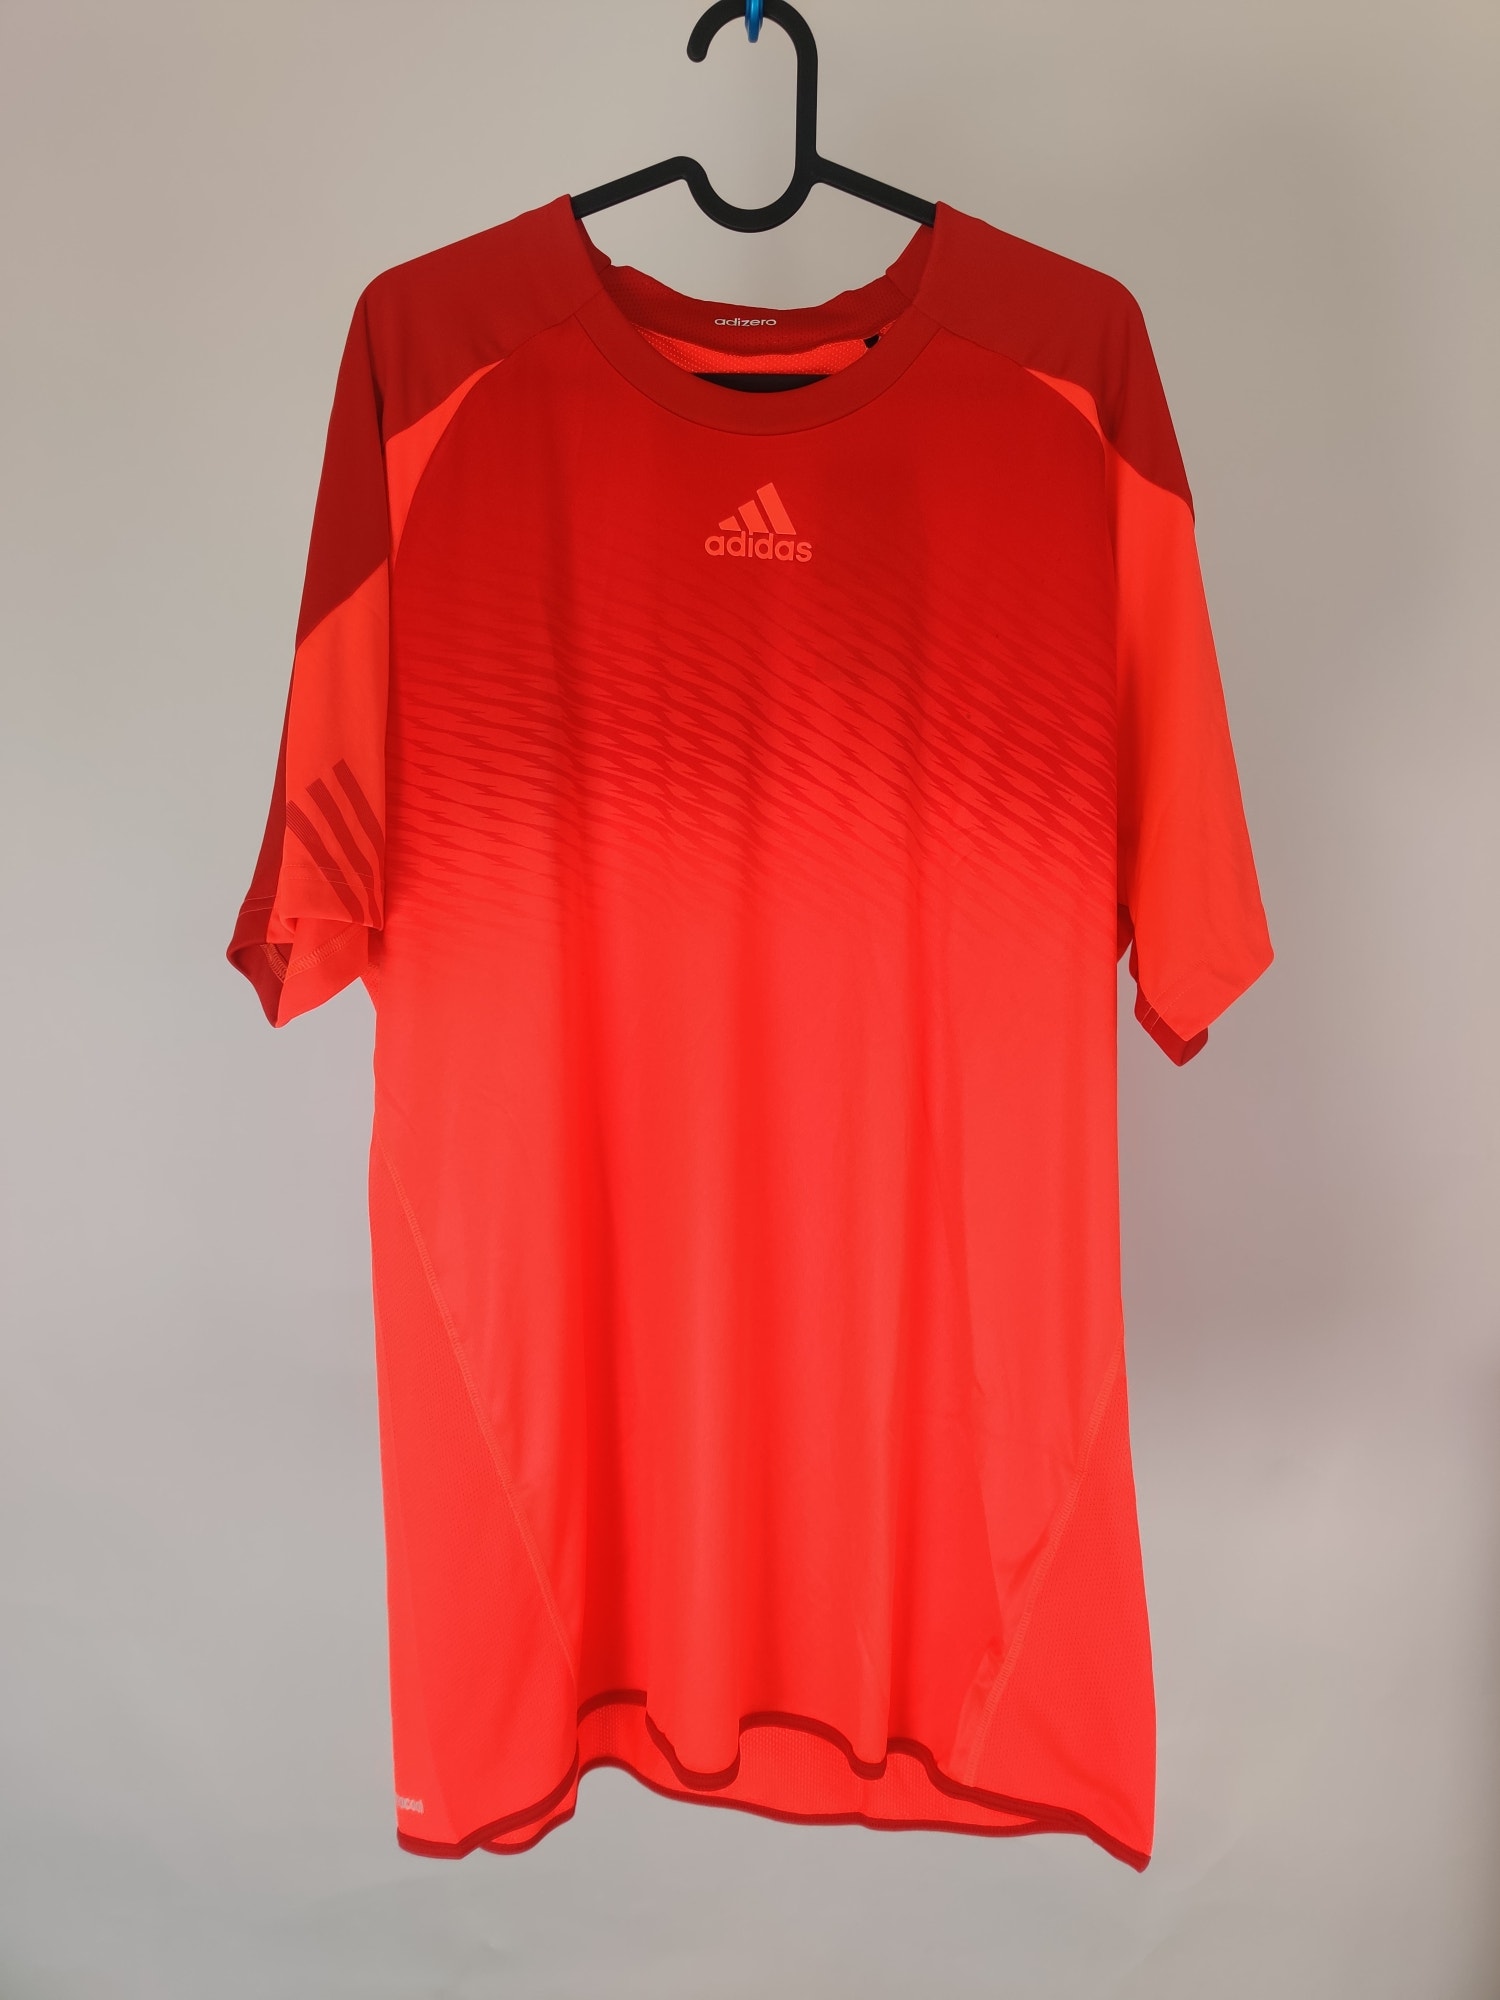 (V) adidas Adizero Mens Running T-Shirt Lightweight ORANGE Fitness Top - Picture 4 of 9